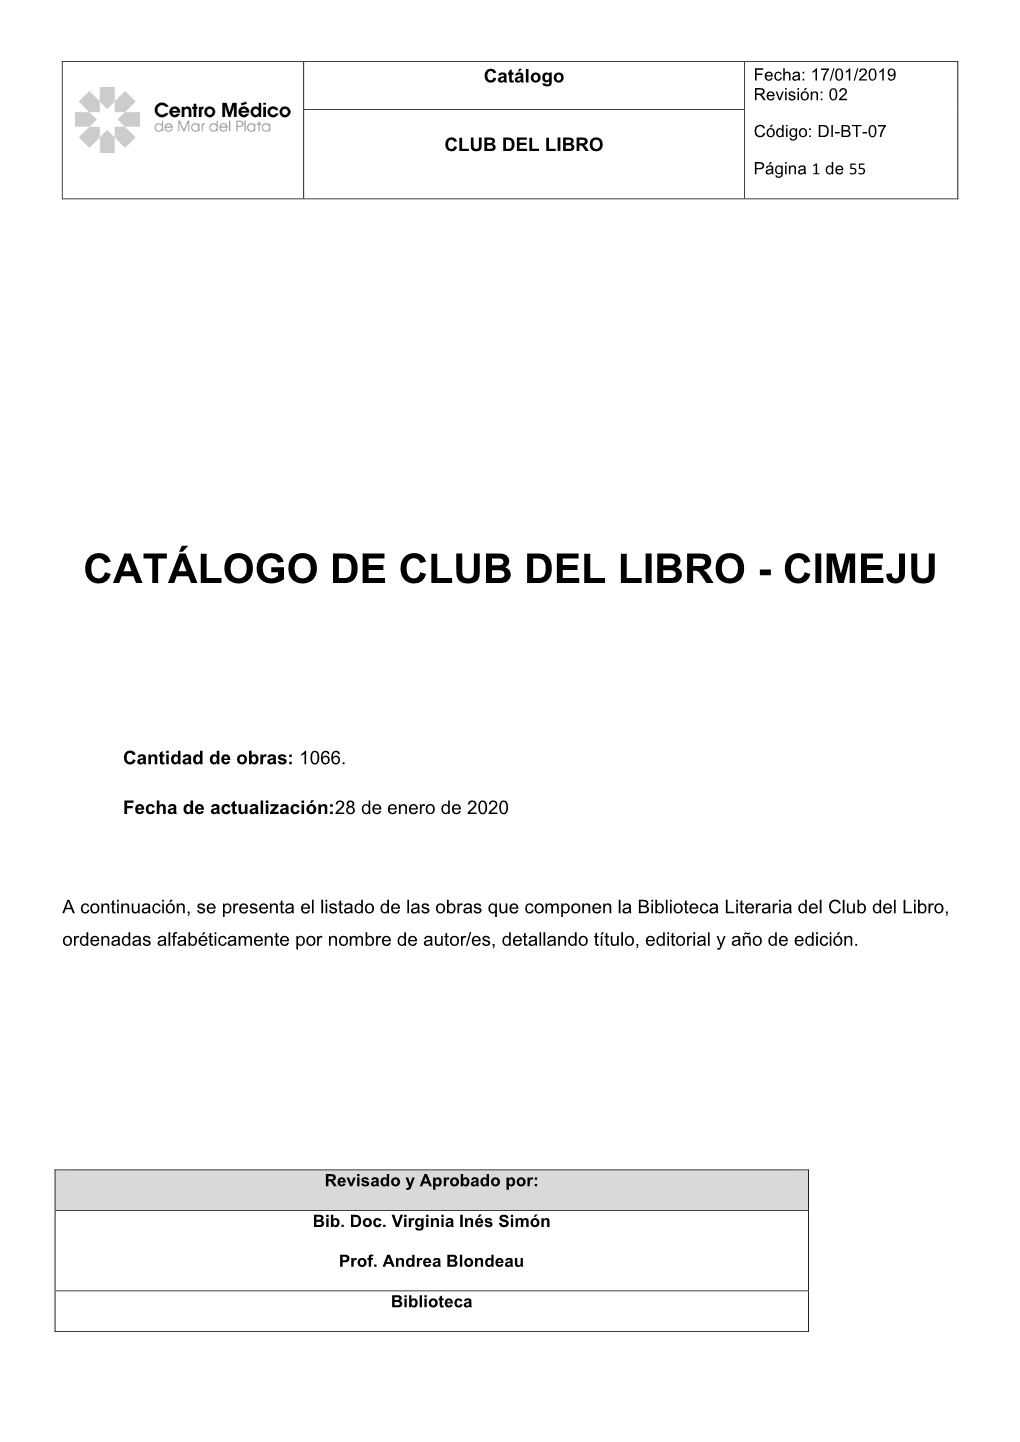 Catálogo De Club Del Libro - Cimeju